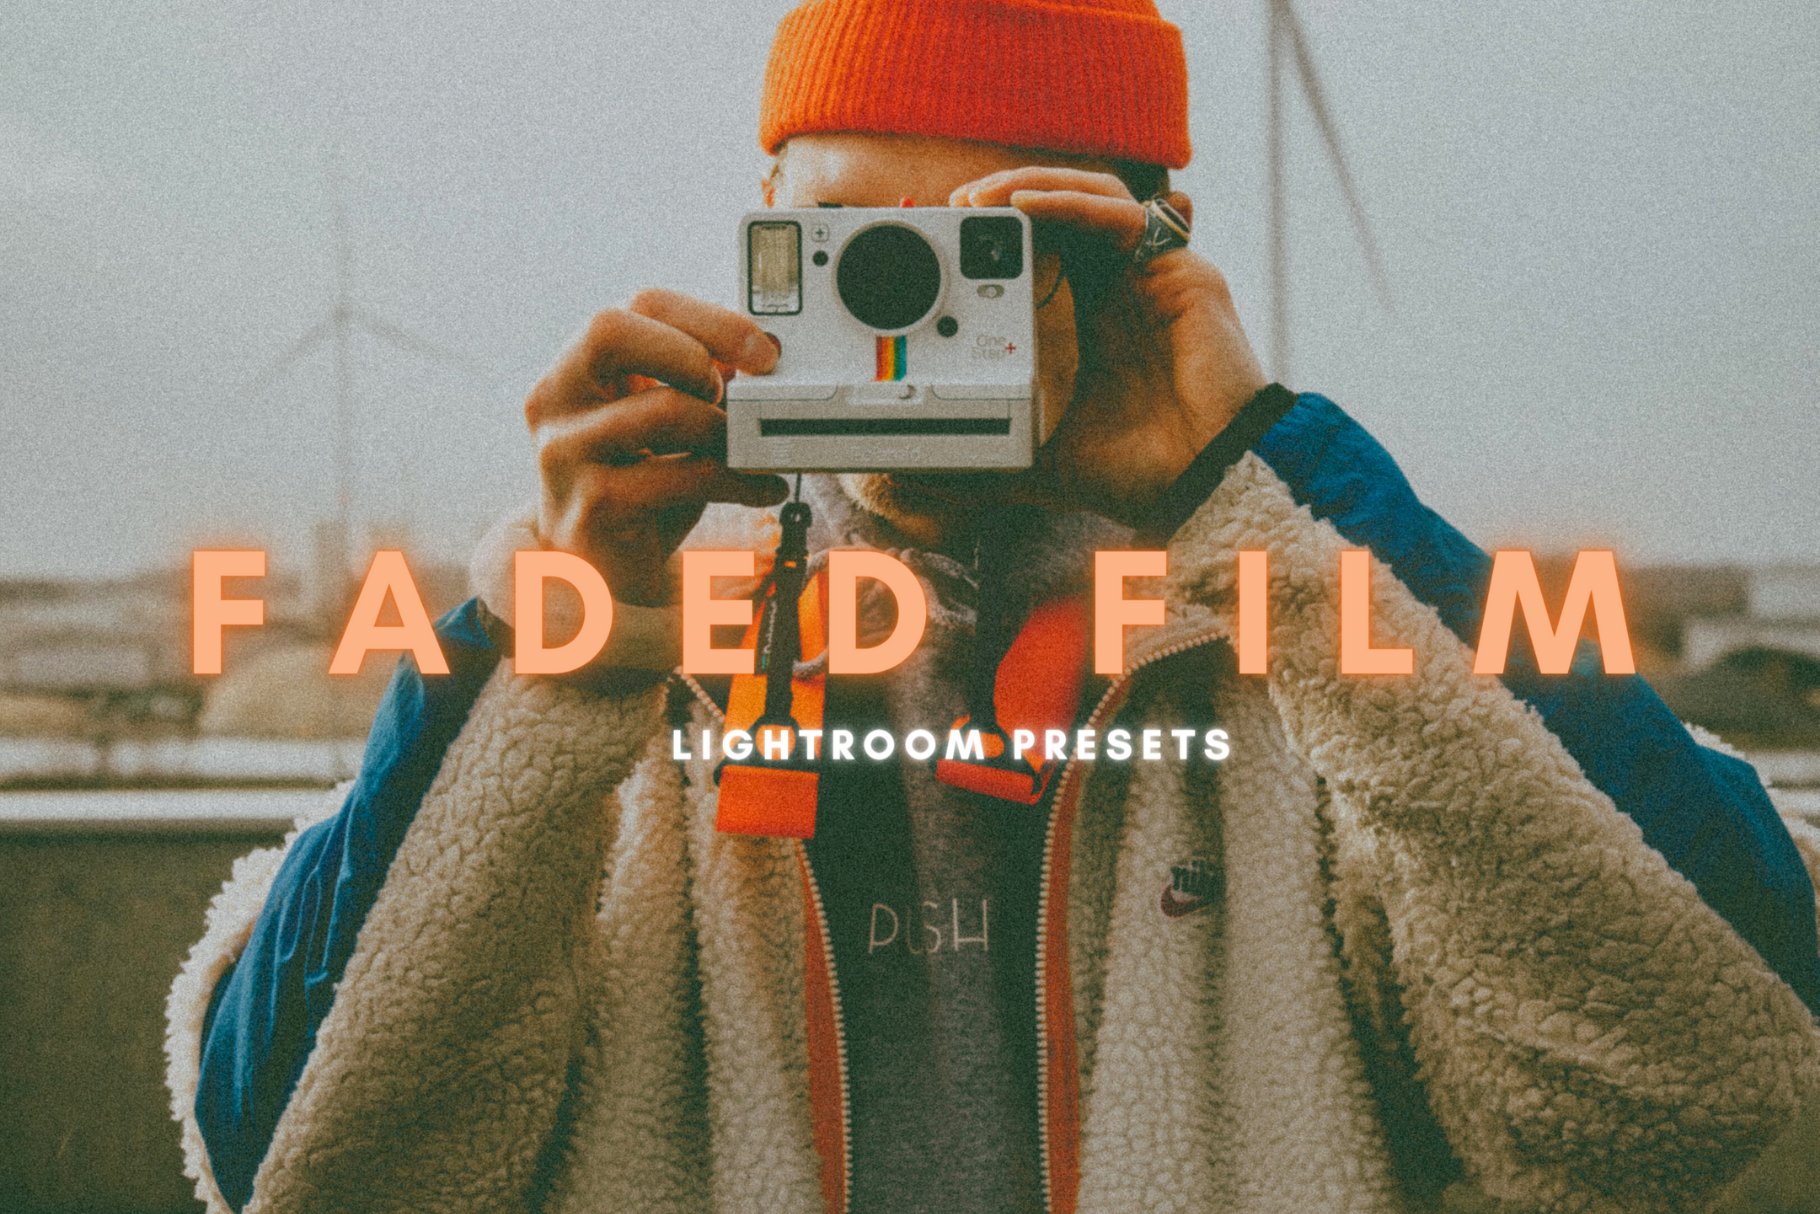 Faded Film Lightroom Presetscover image.